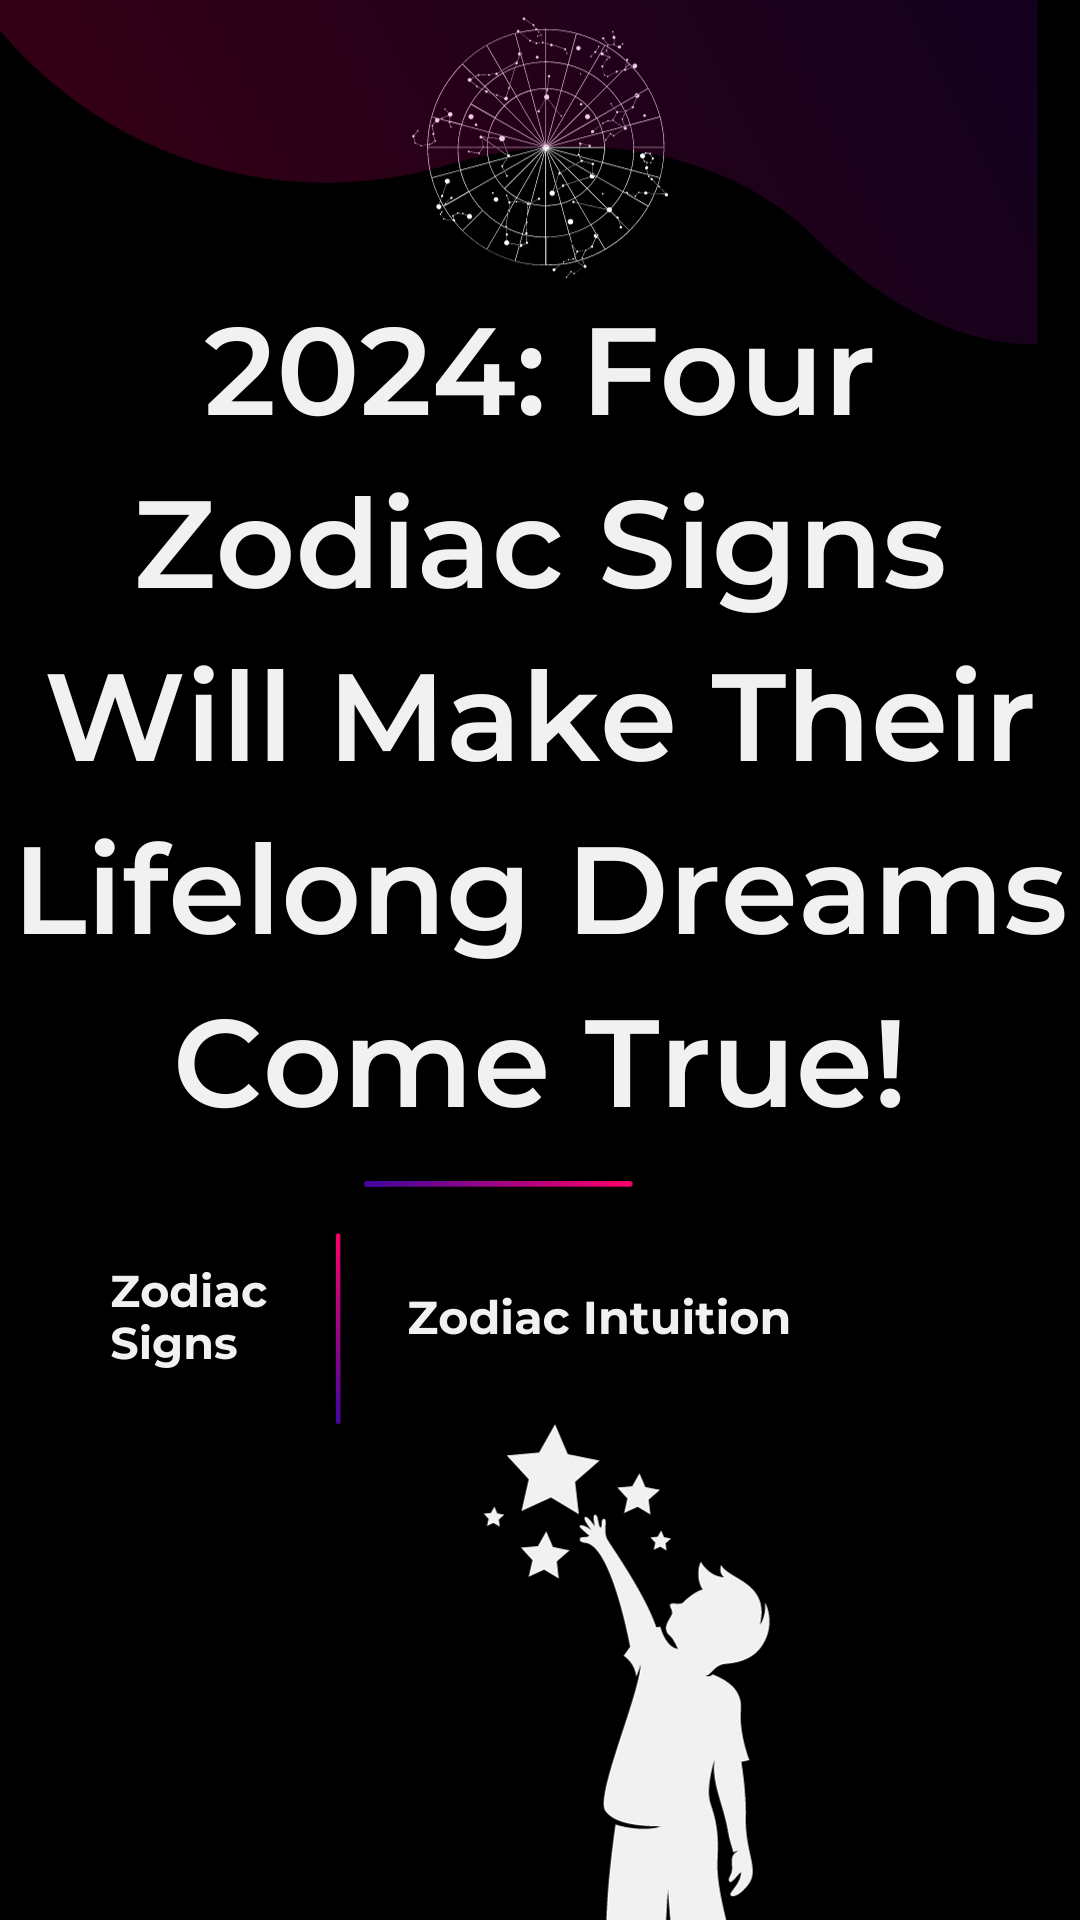 2024: Four Zodiac Signs Will Make Their Lifelong Dreams Come True!